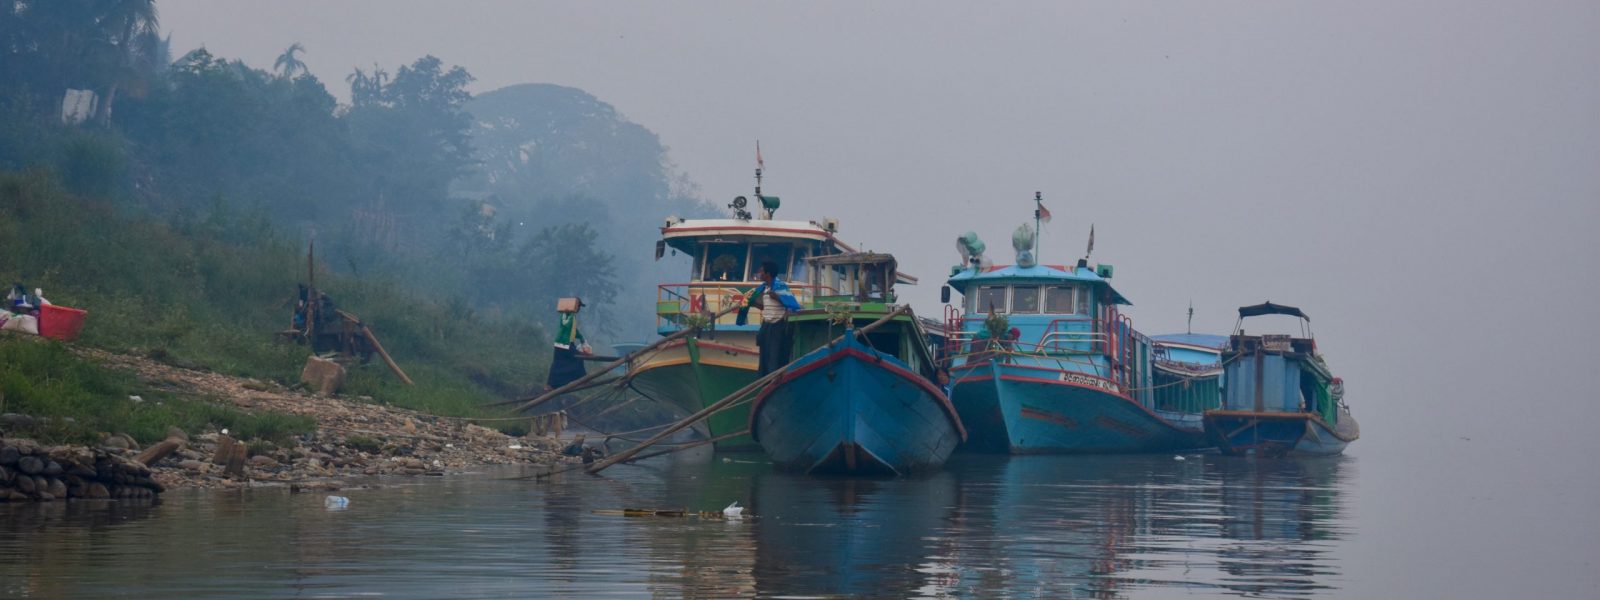 Nagaland - Chindwind River - Myanmar - Sampan Travel